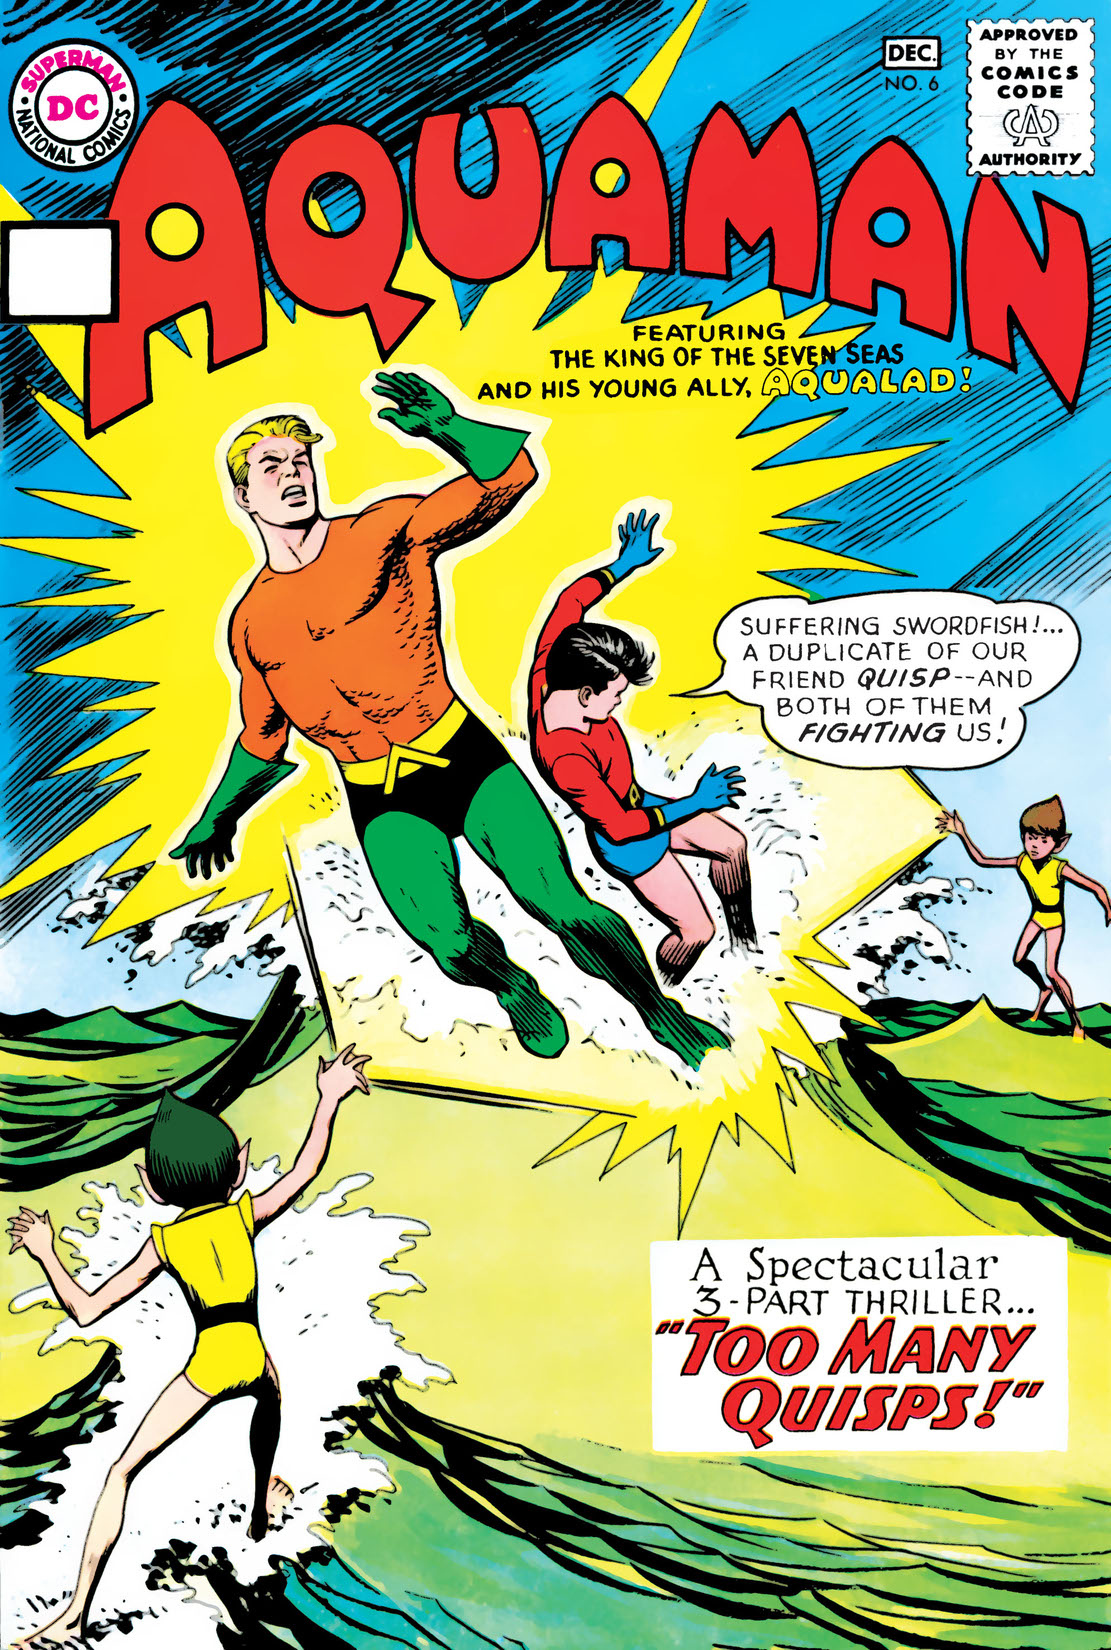 Aquaman (1962-) #6 preview images